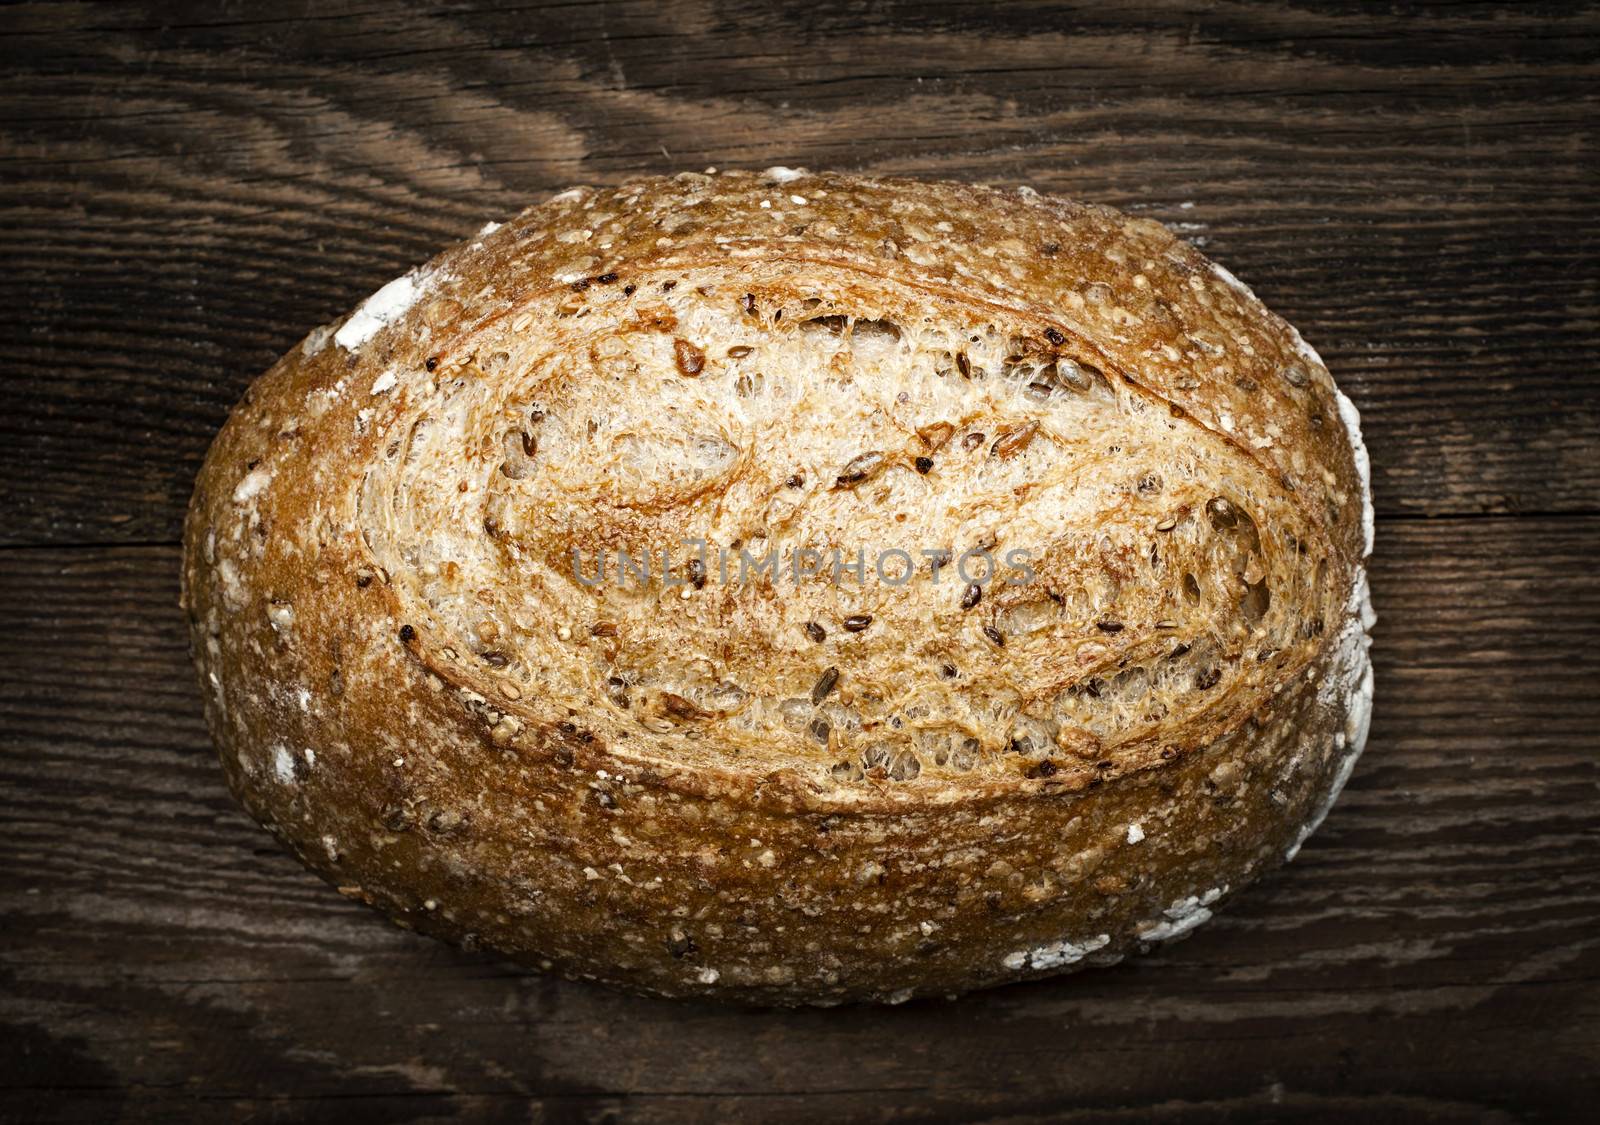 Loaf of multigrain artisan bread by elenathewise